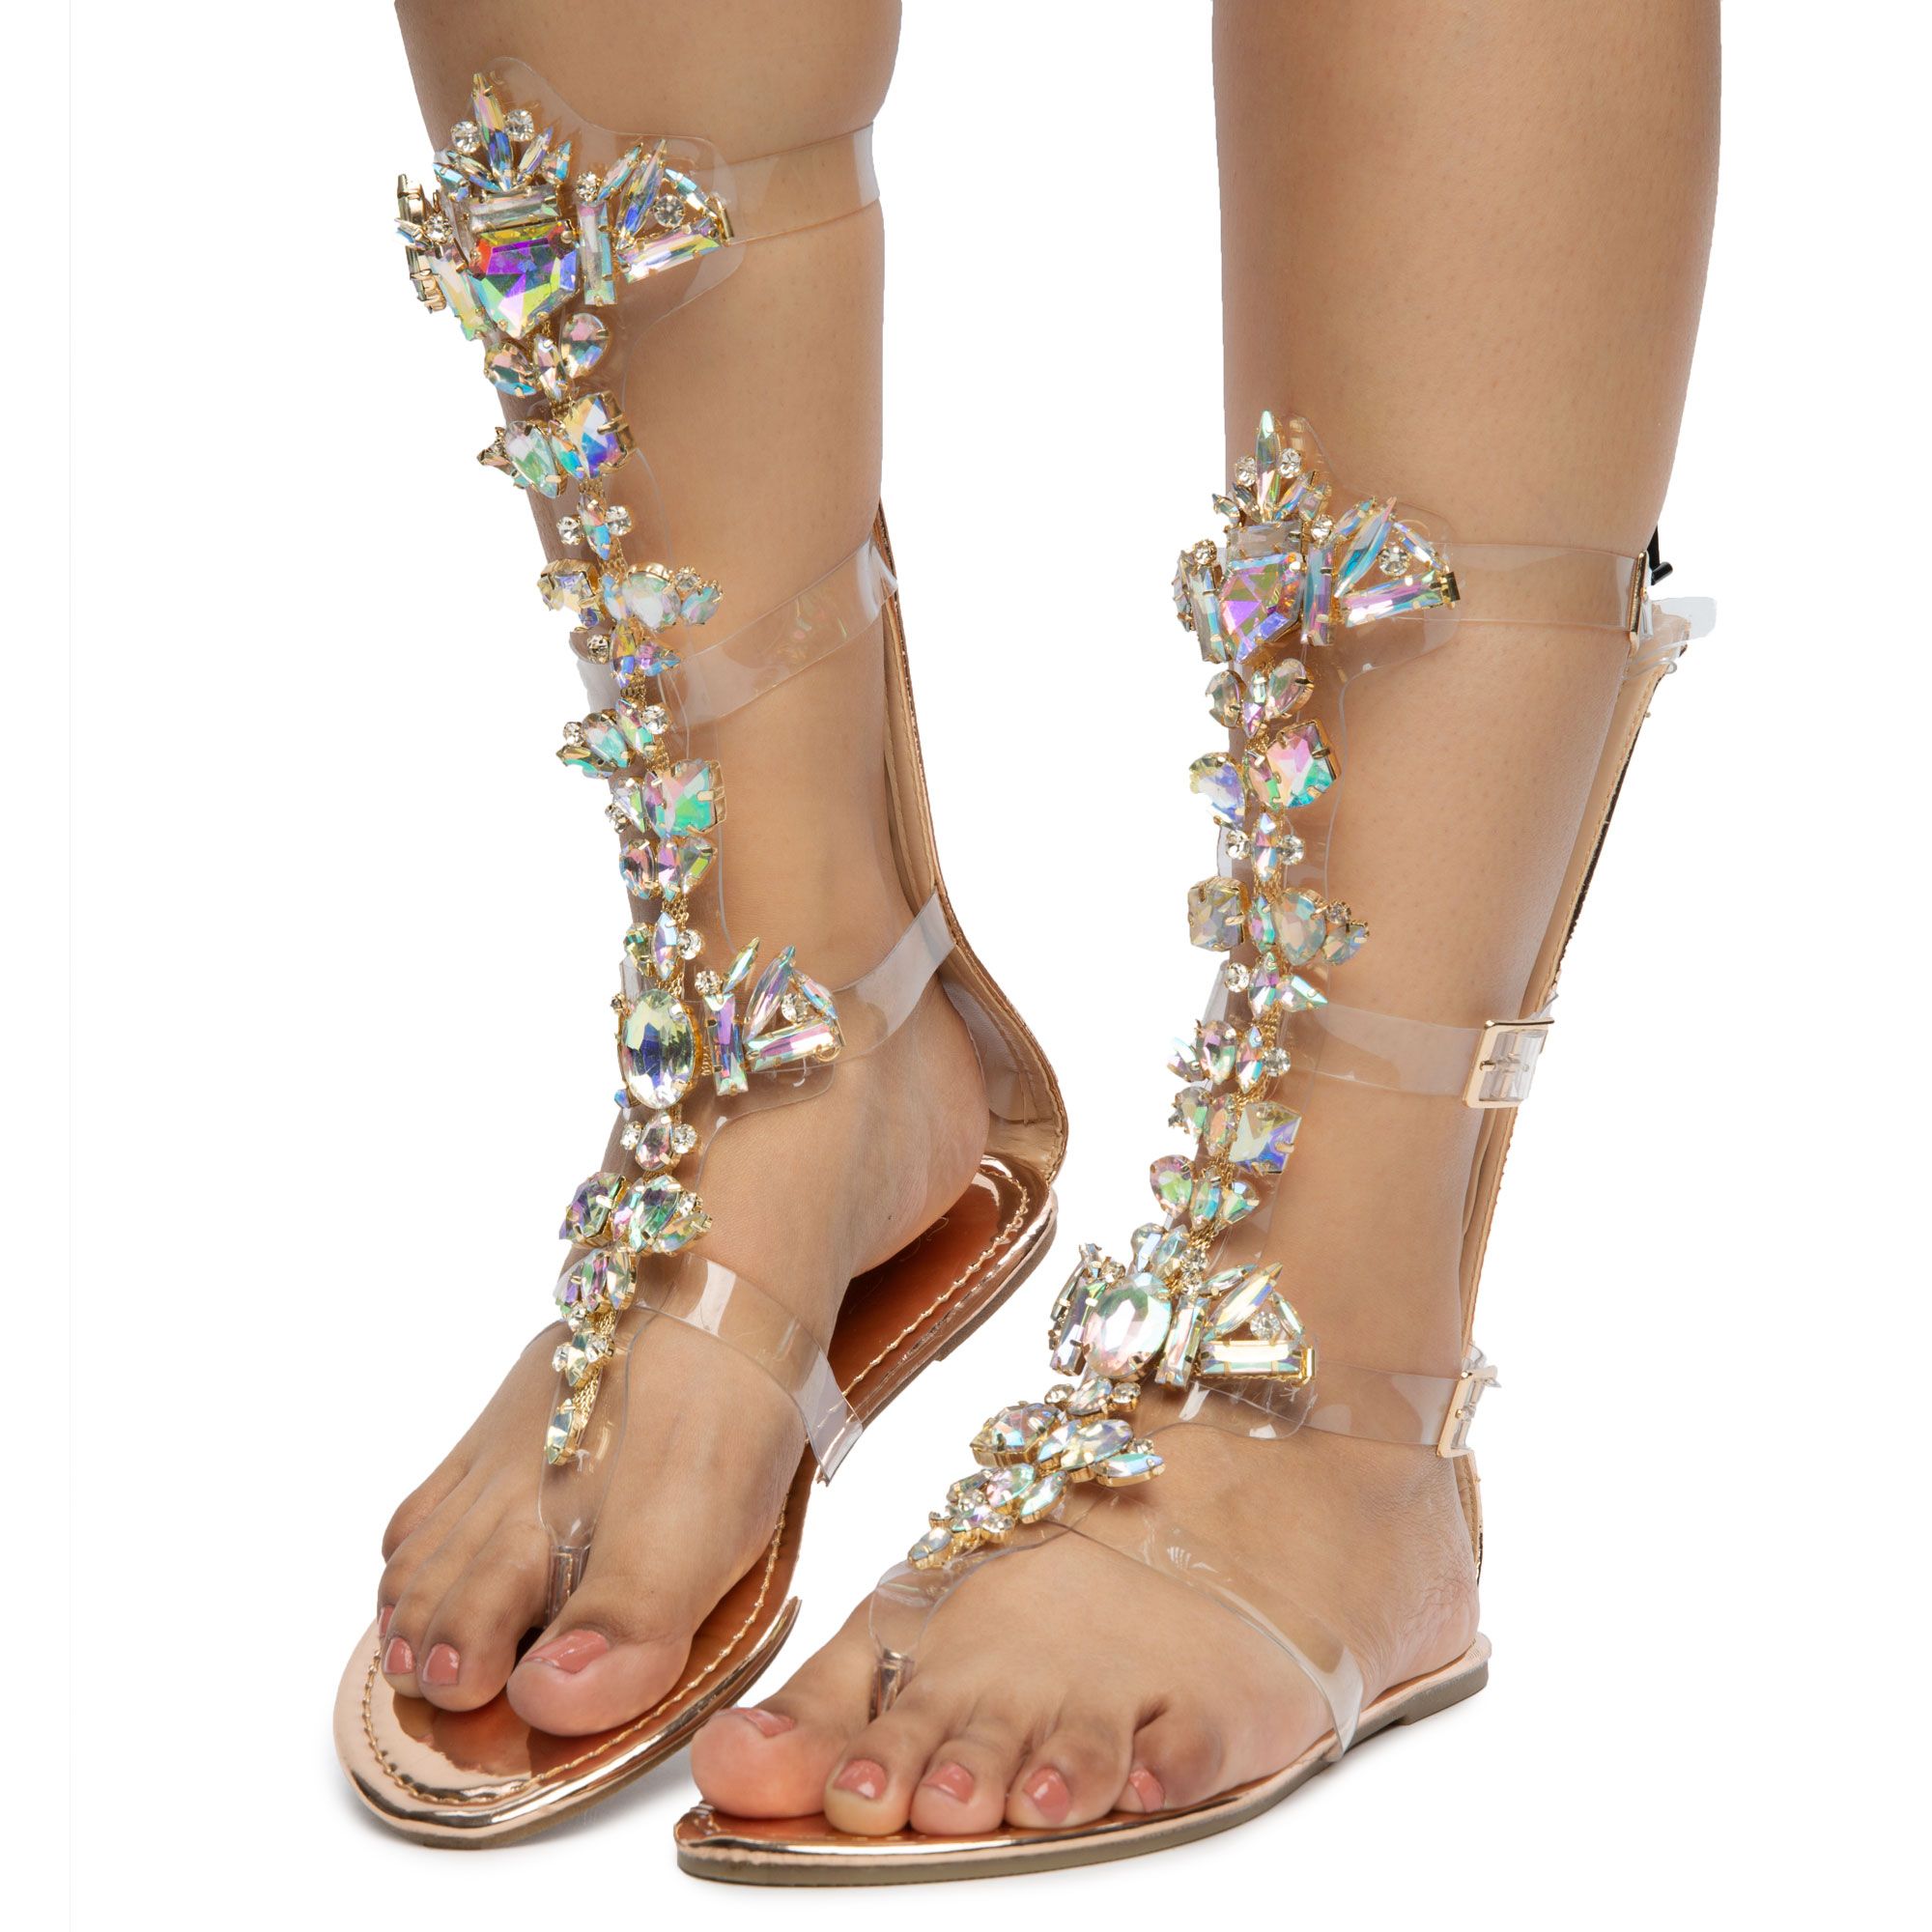 rose gold sandals with rhinestones